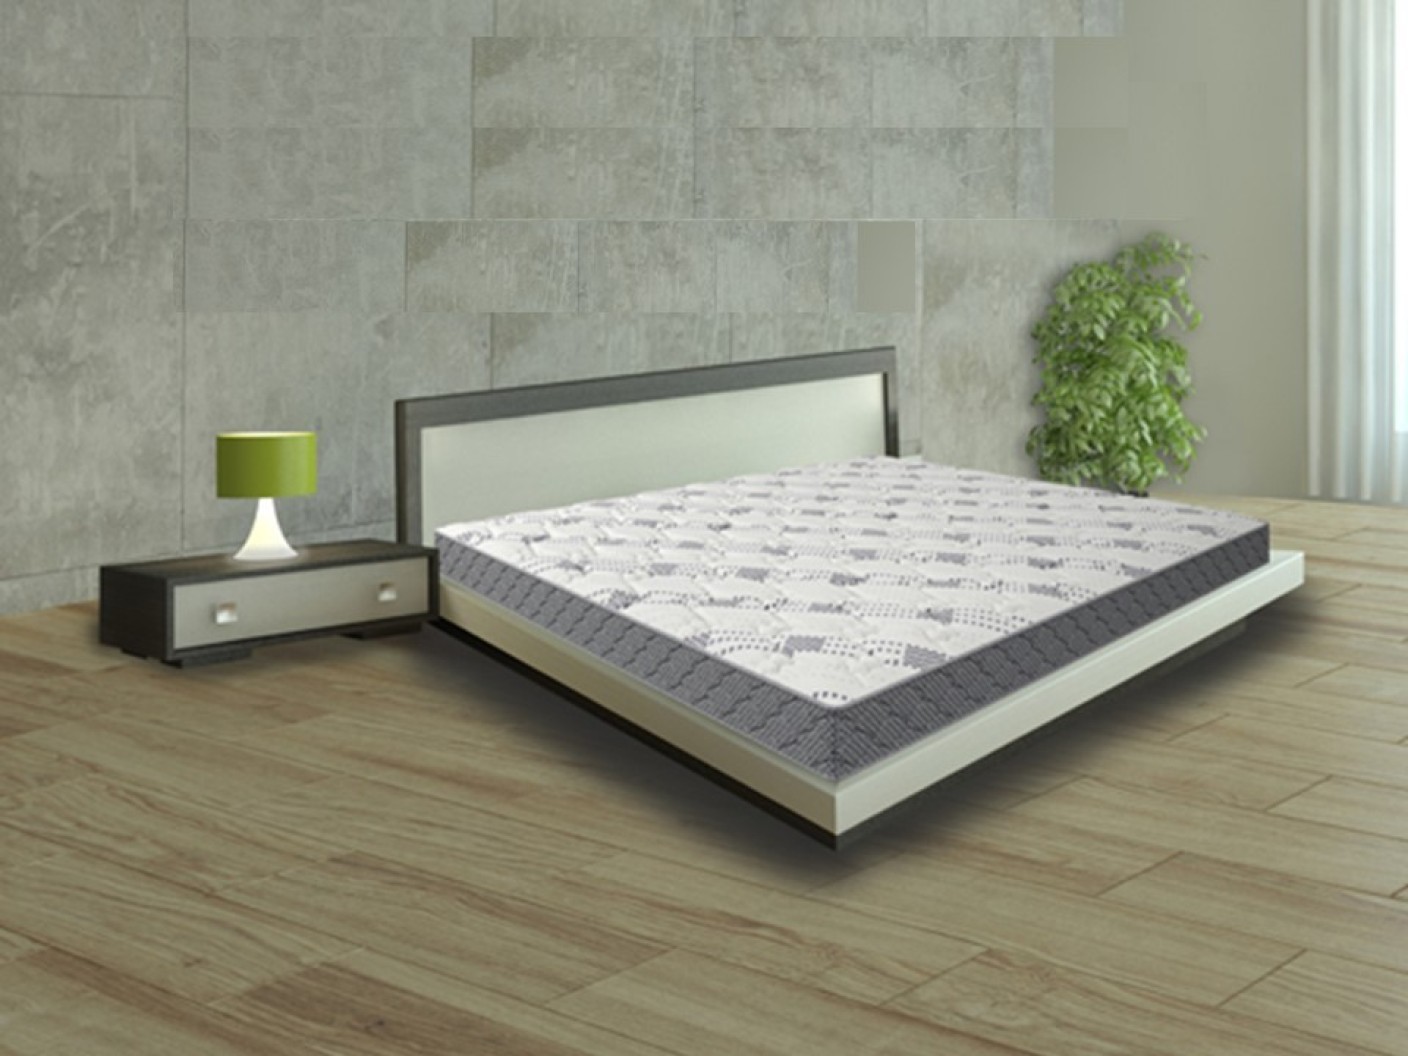 sleepwell king size bed mattress price